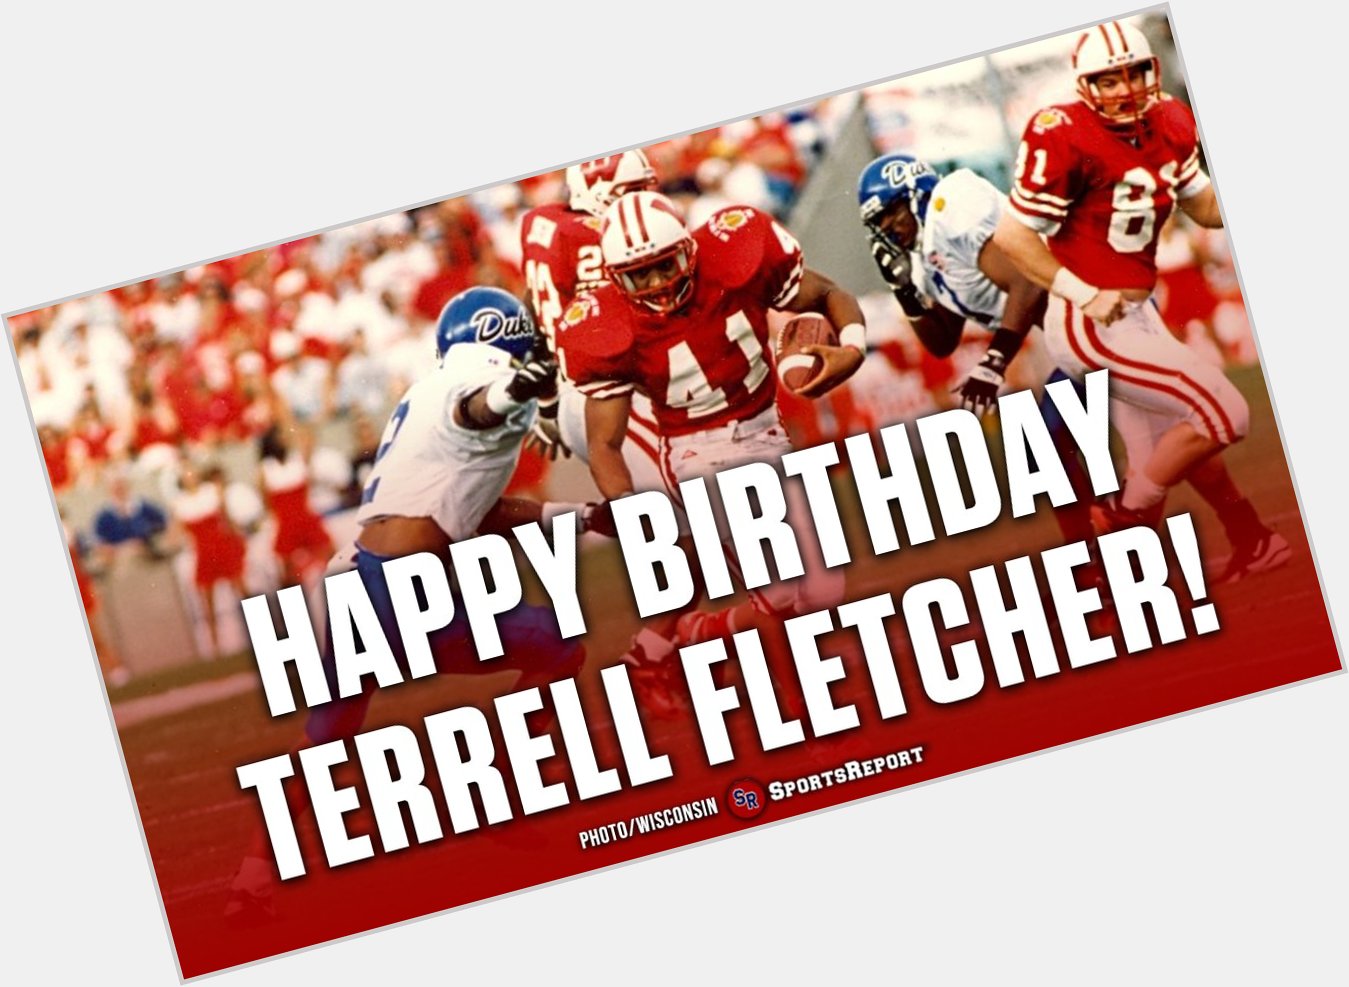  Fans, let\s wish legend Terrell Fletcher a Happy Birthday! GO 